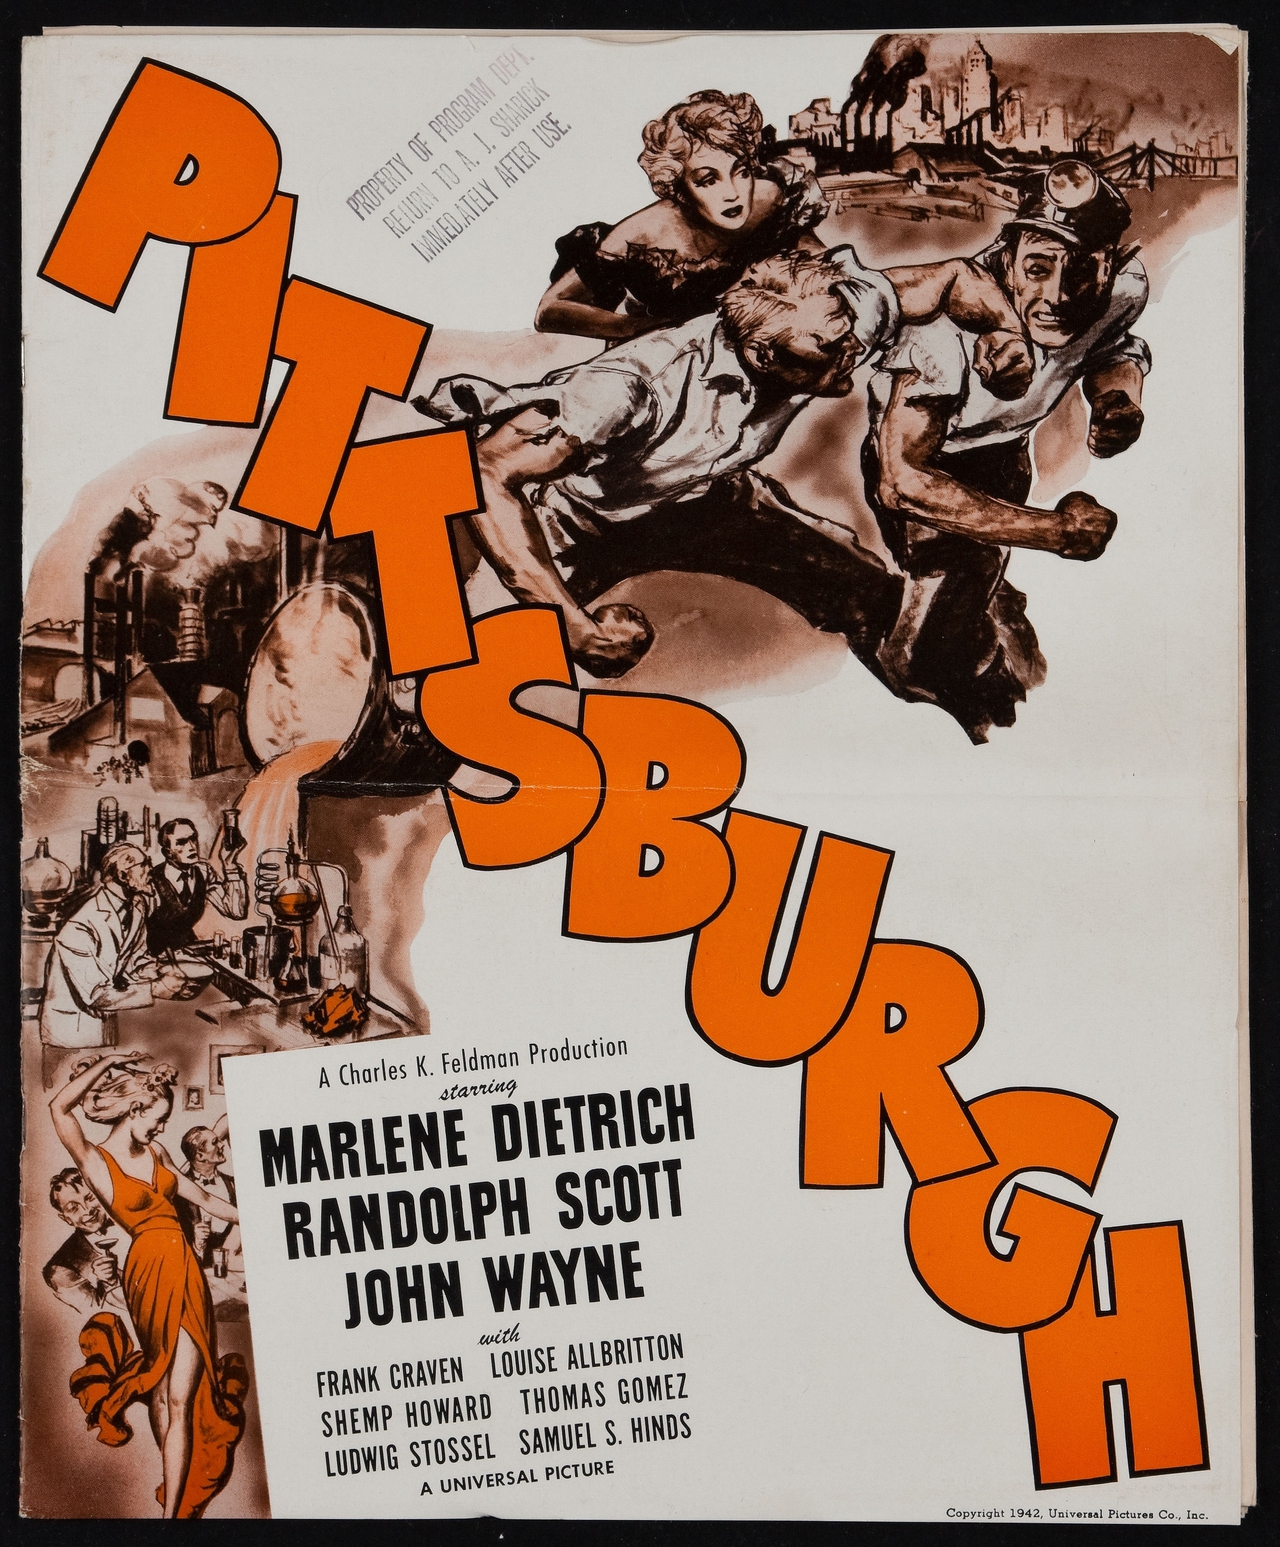 Randolph Scott در صحنه فیلم سینمایی Pittsburgh به همراه John Wayne و مارلنه دیتریش